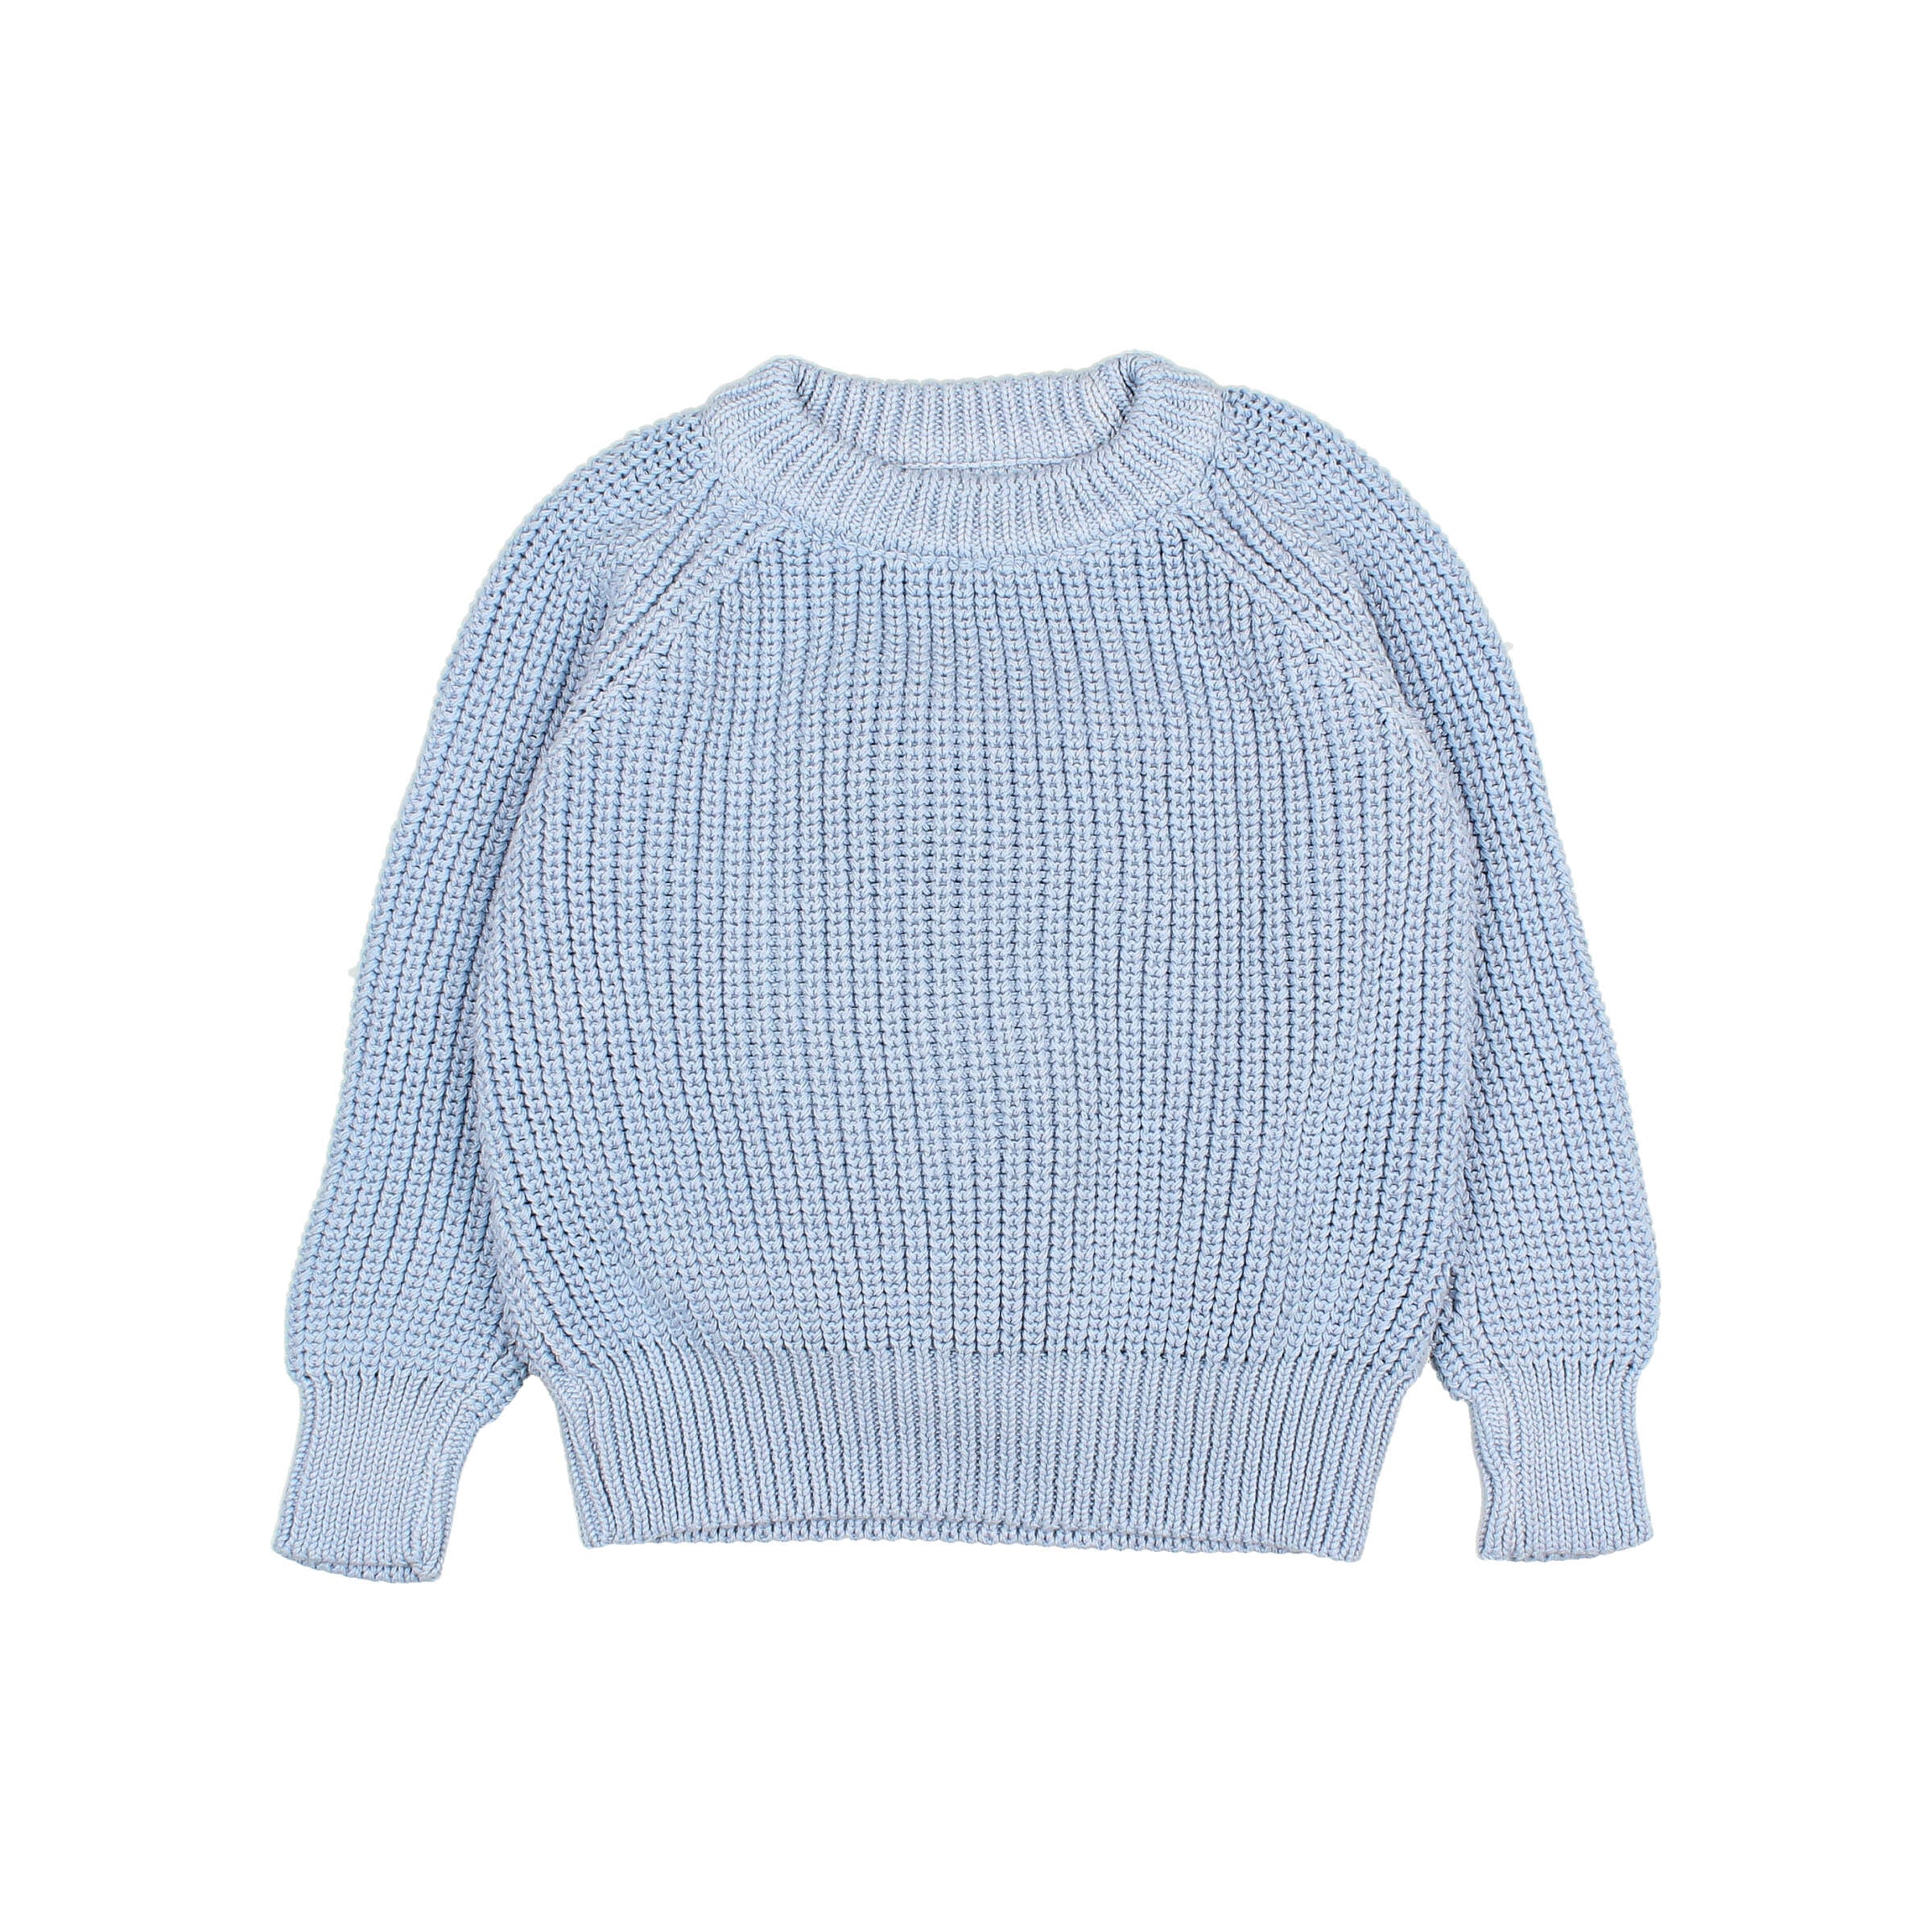 Buho - kids - cotton knit jumper - placid blue